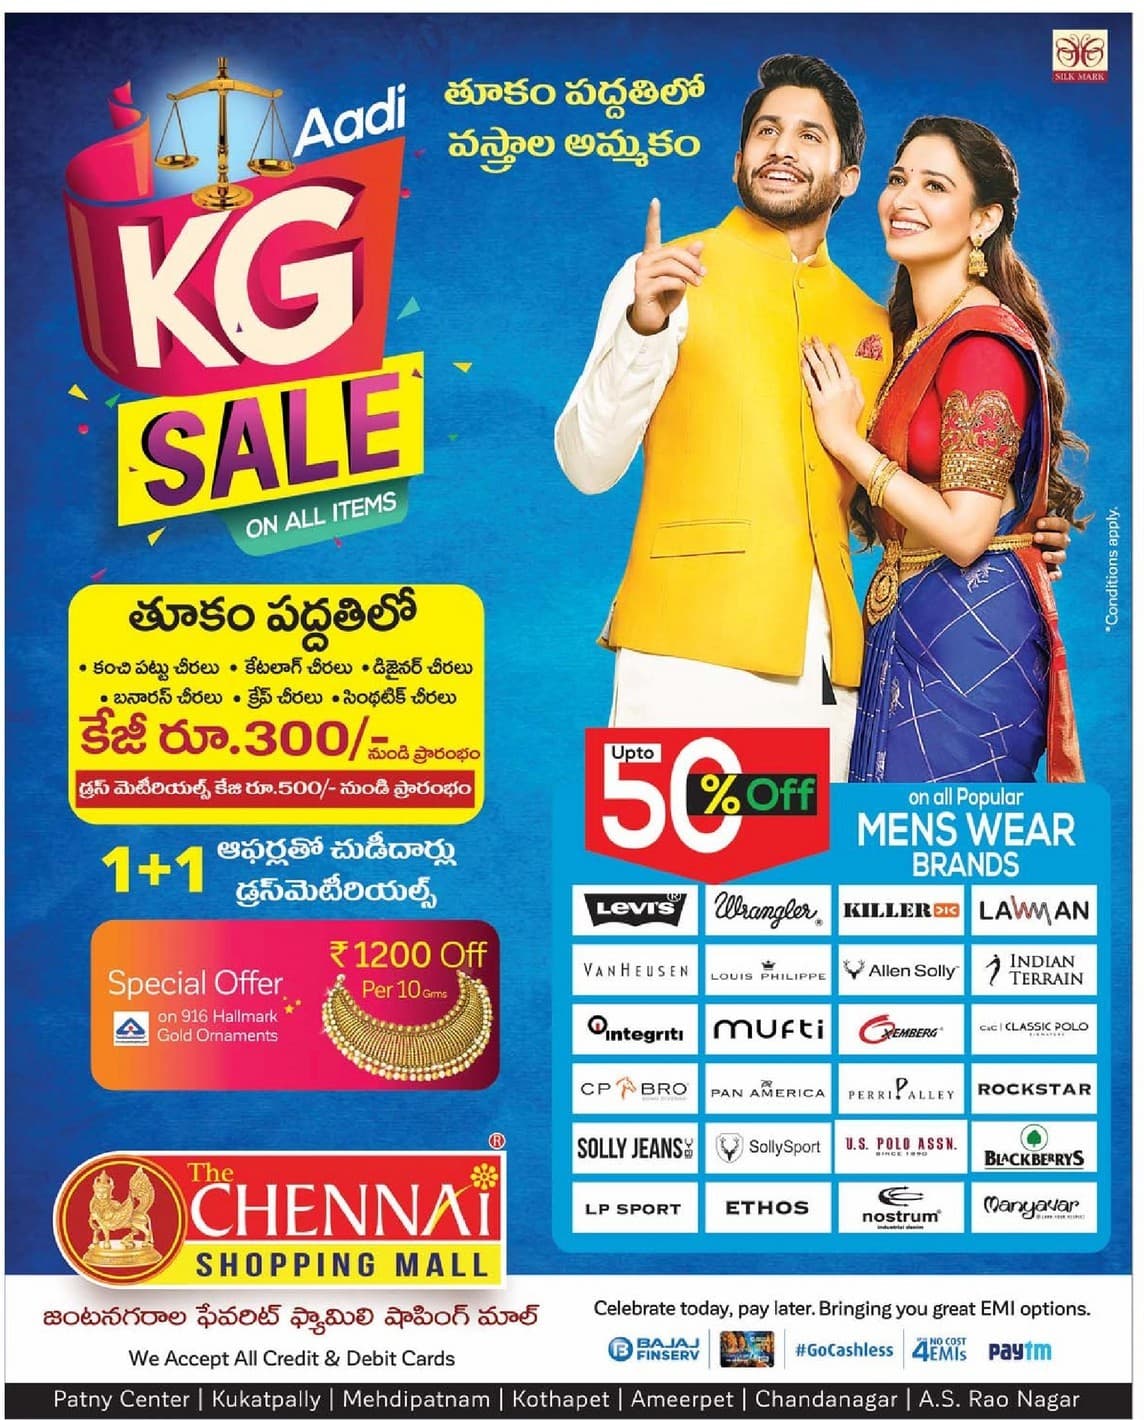 The Chennai Shopping Mall Aadi Kg Sale On All Items .Jpg